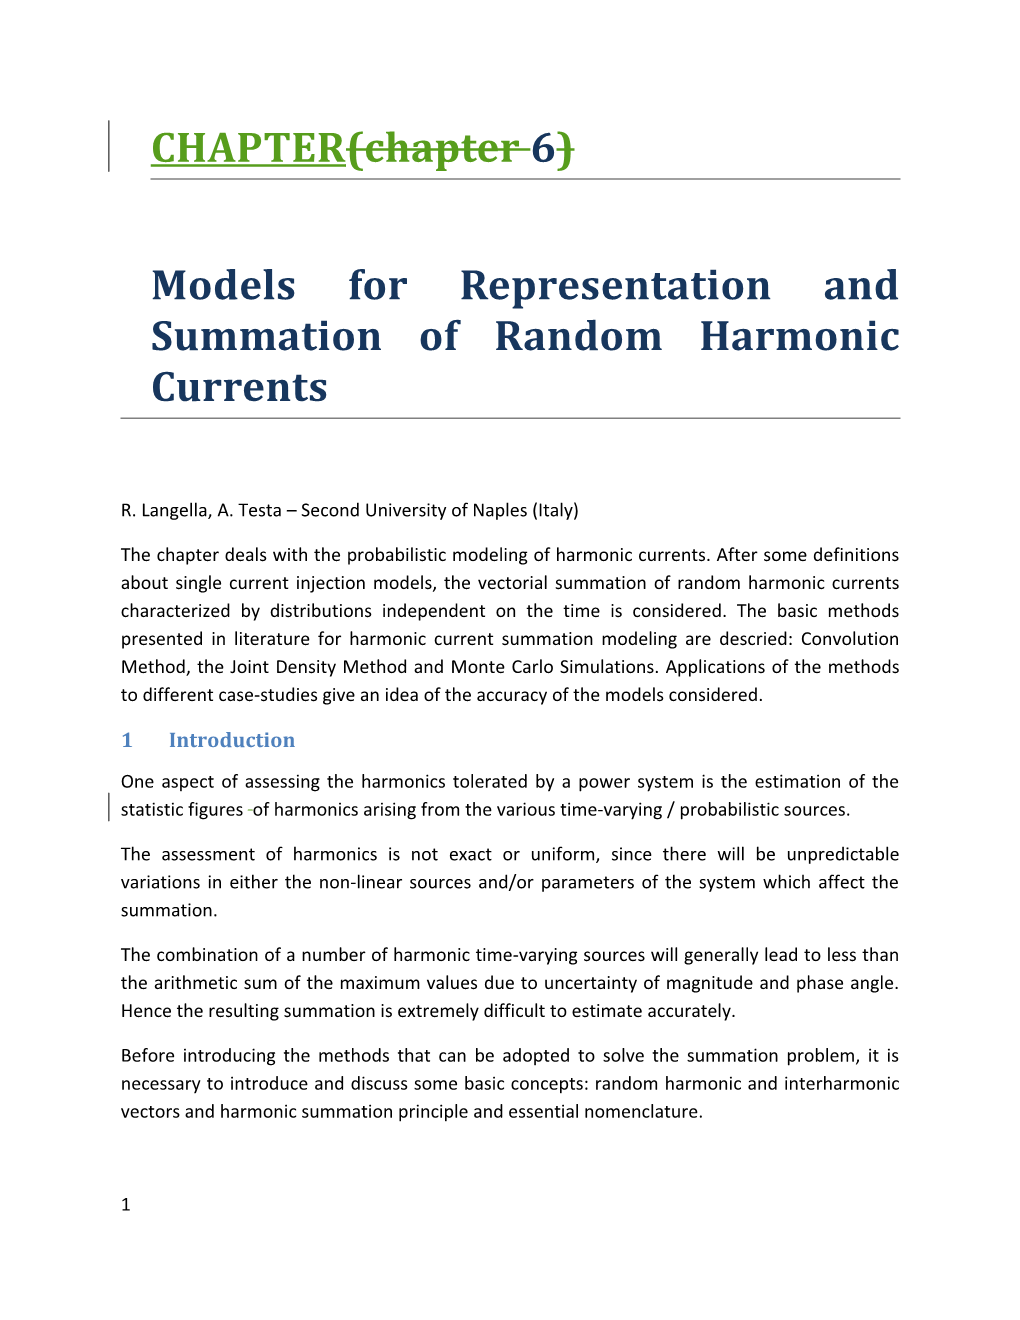 Models for Representation and Summation of Random Harmonic Currents